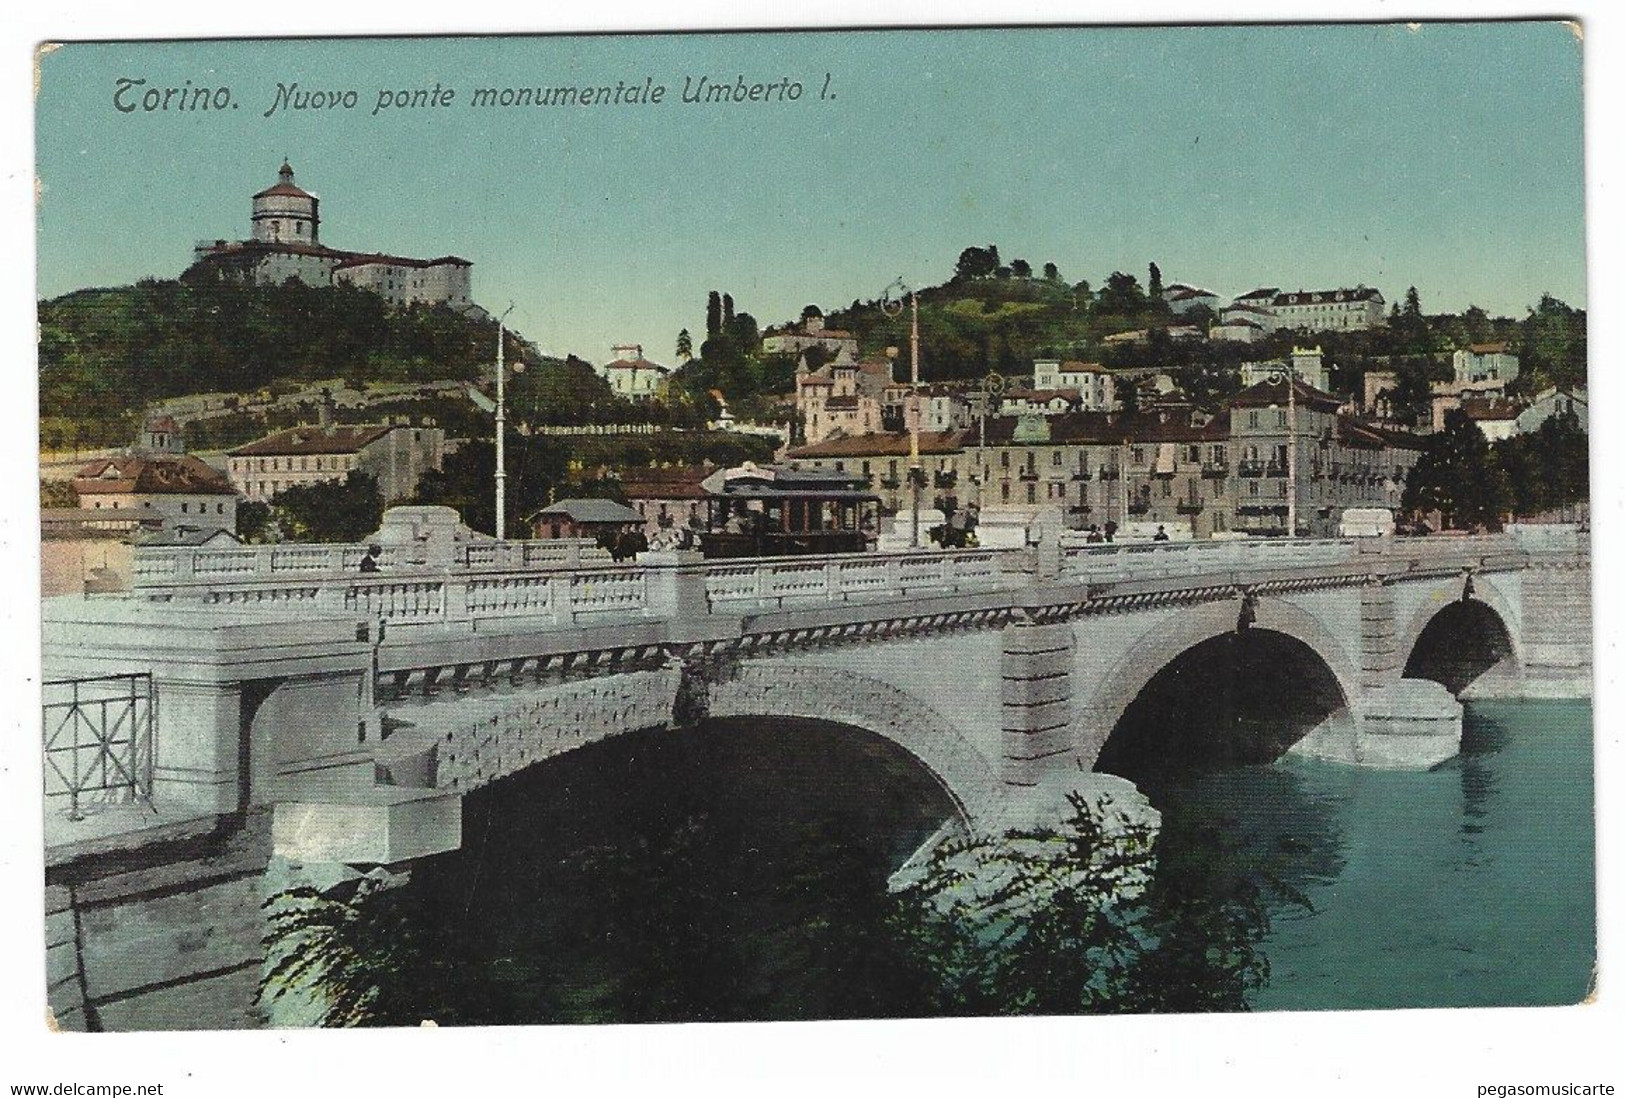 10.085 - TORINO NUOVO PONTE MONUMENTALE UMBERTO I - 1930 CIRCA Animata Tram - Ponts